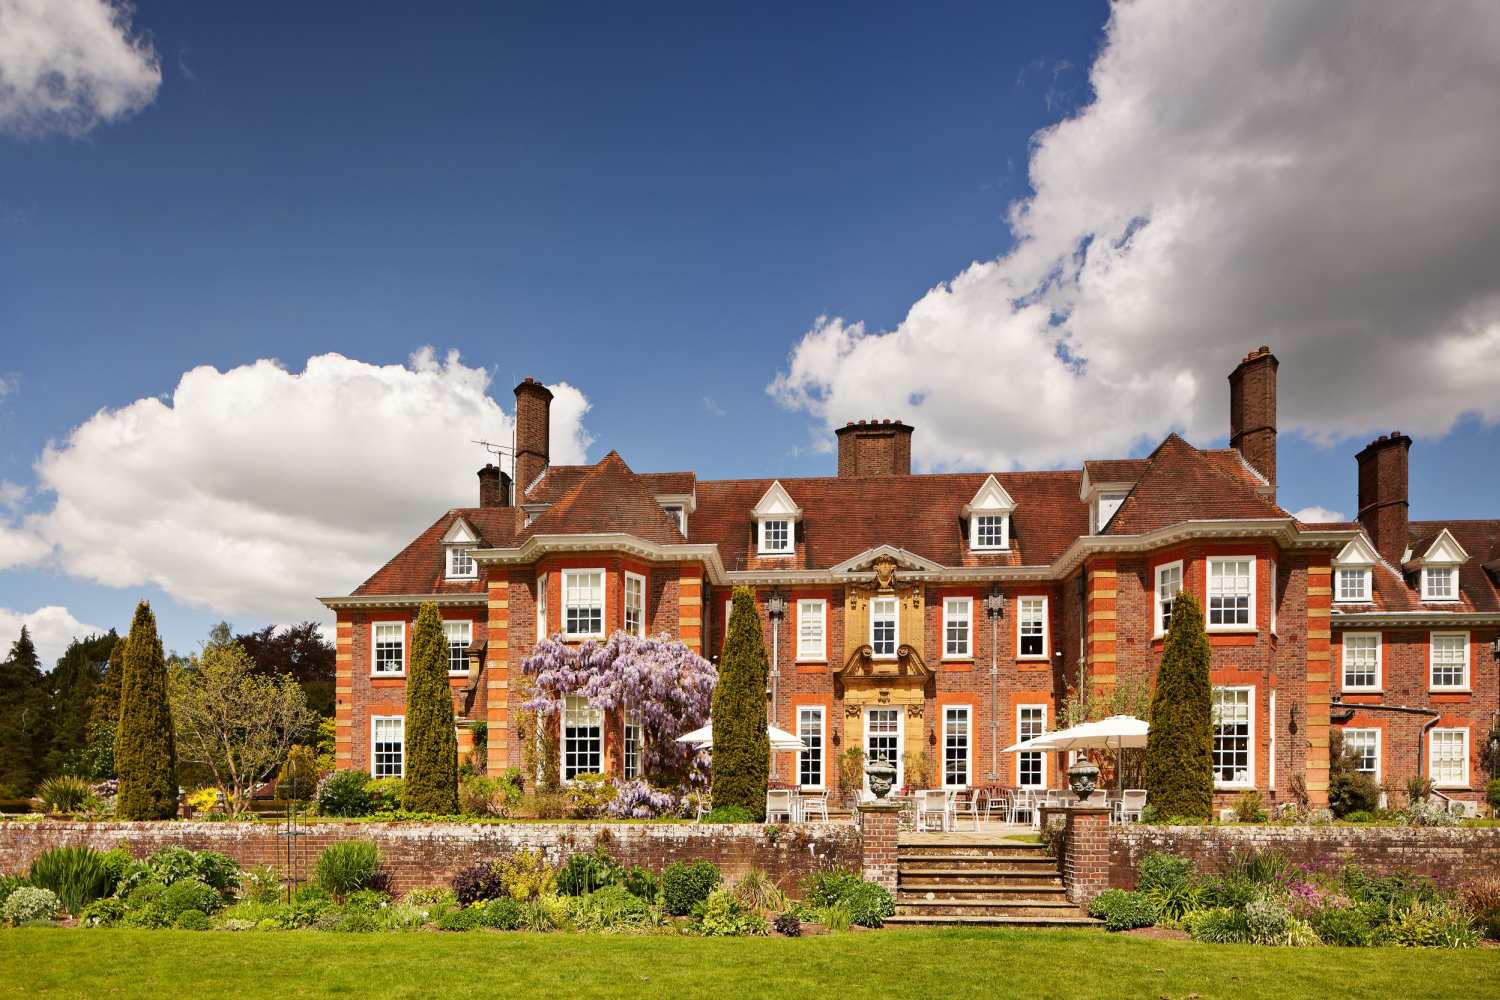 Barnett Hill Hotel Guildford, Surrey - England